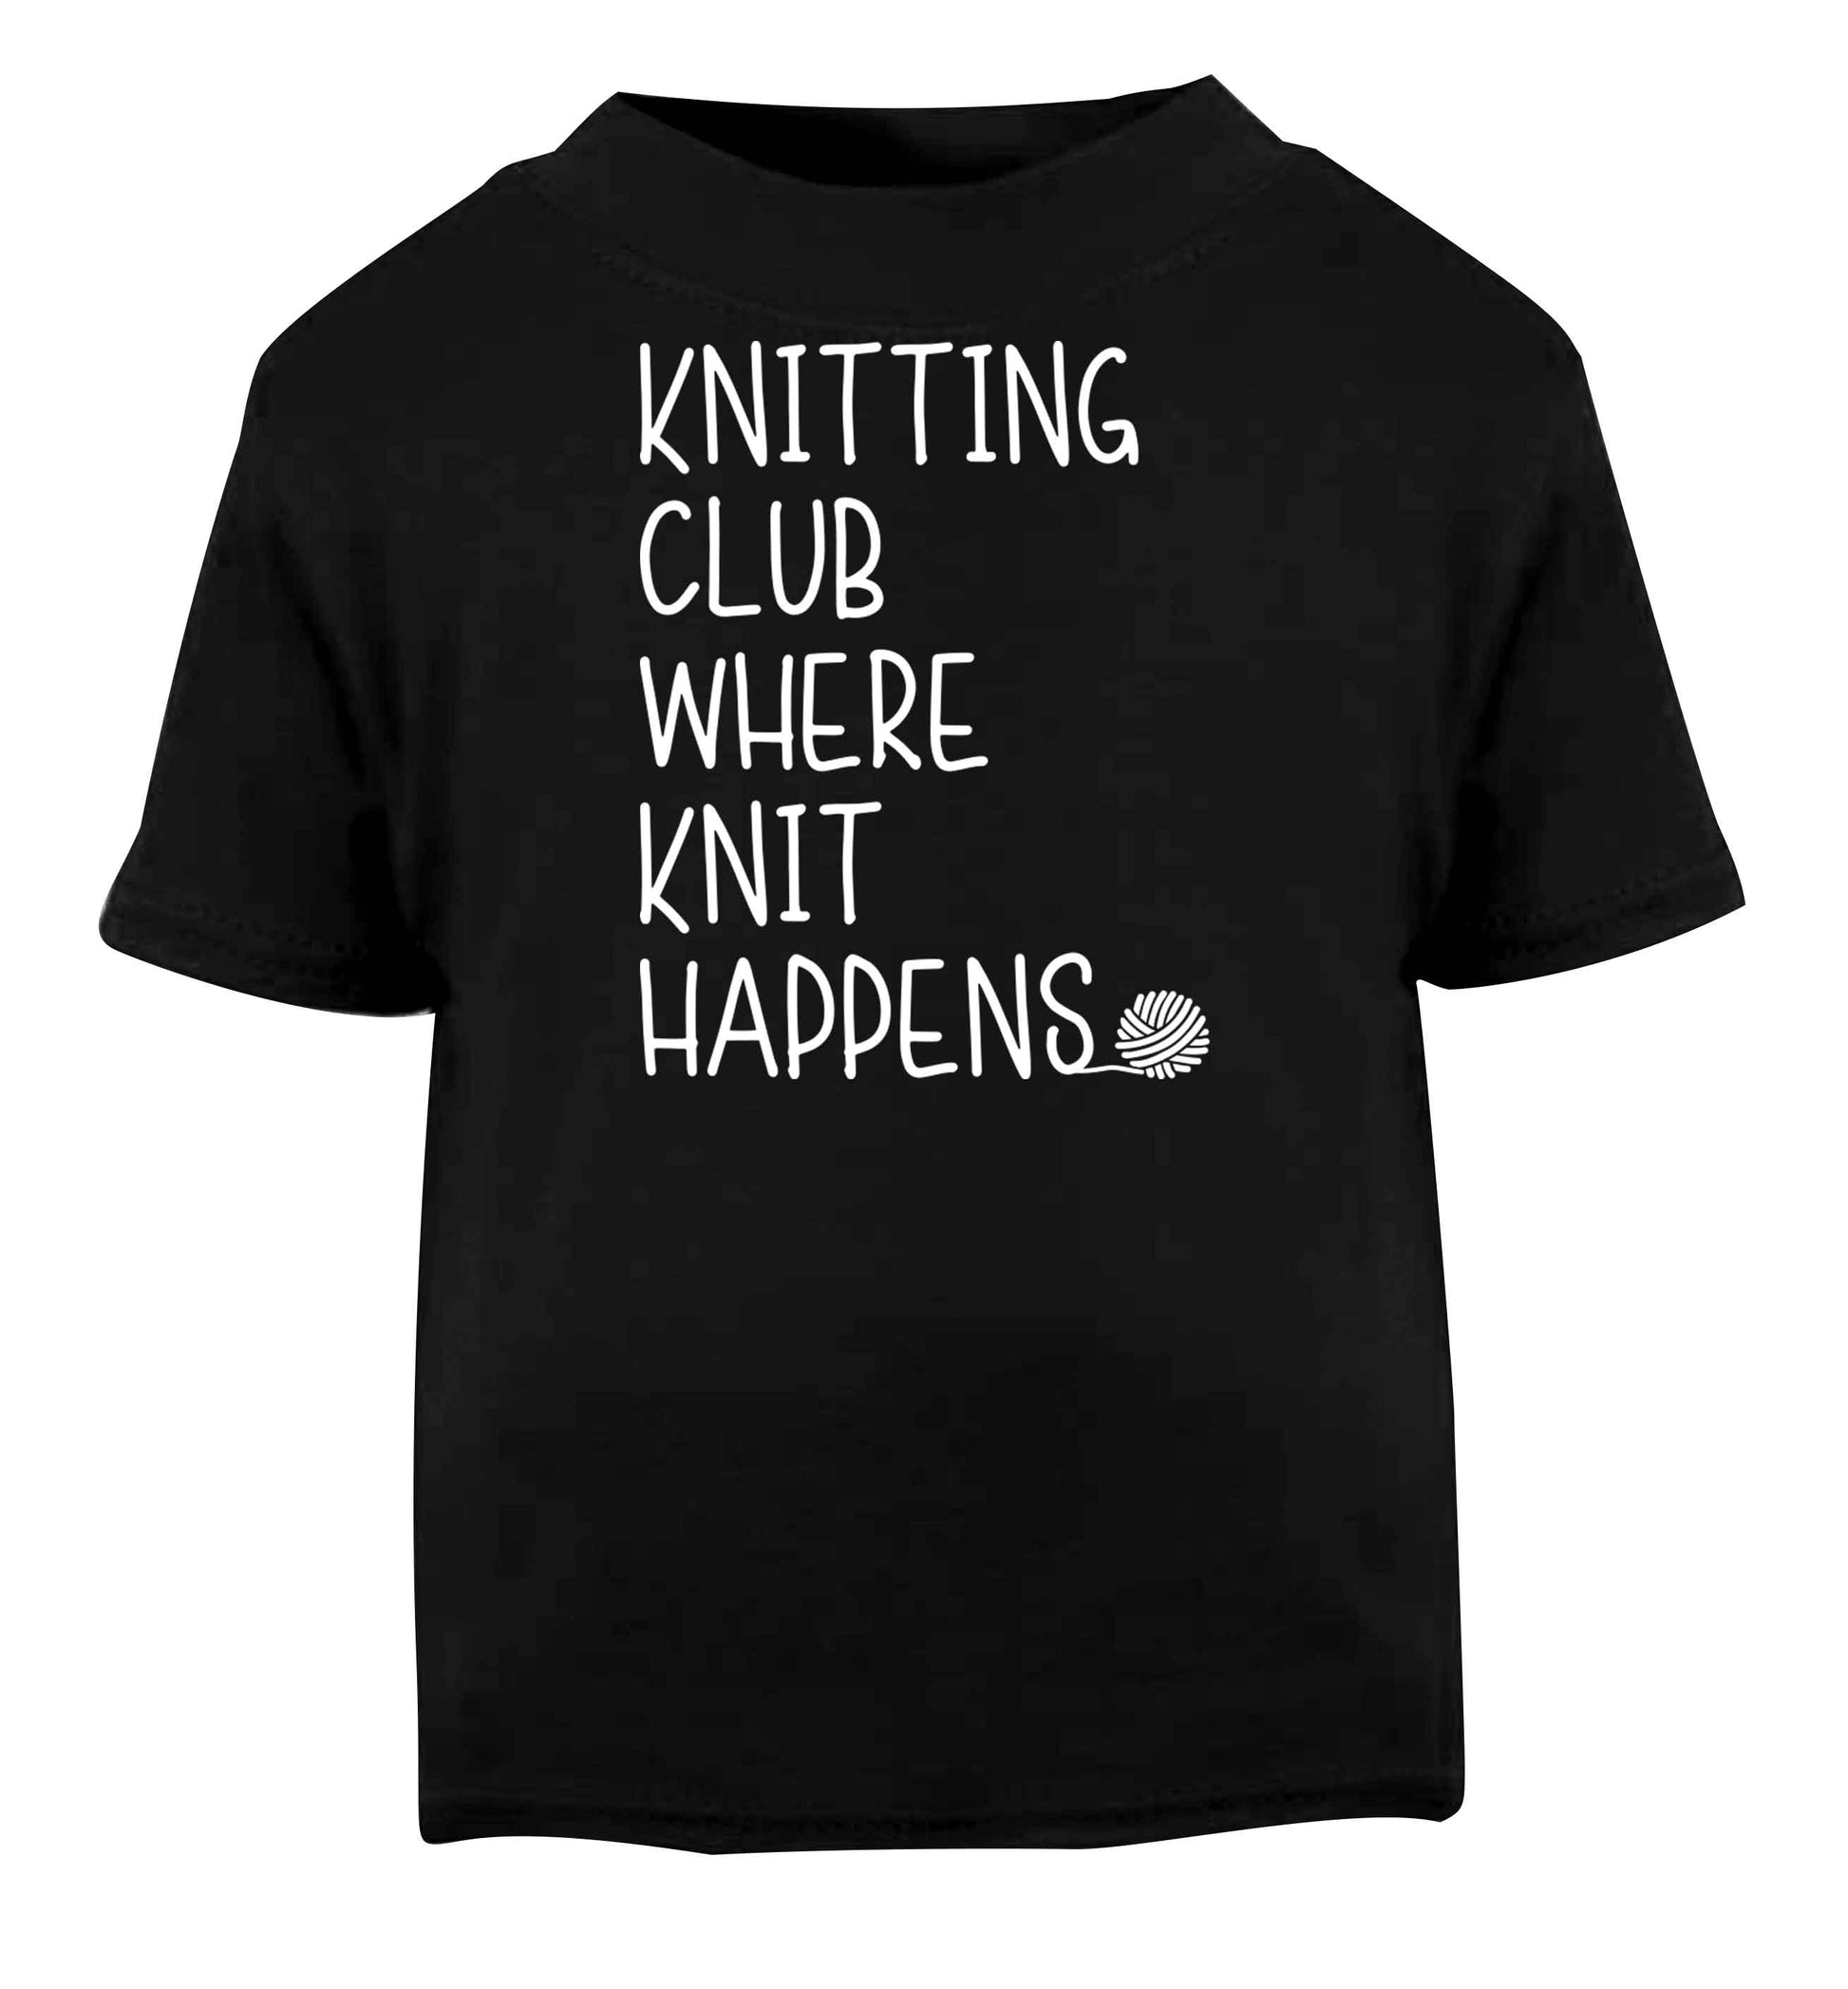 Knitting club where knit happens Black baby toddler Tshirt 2 years